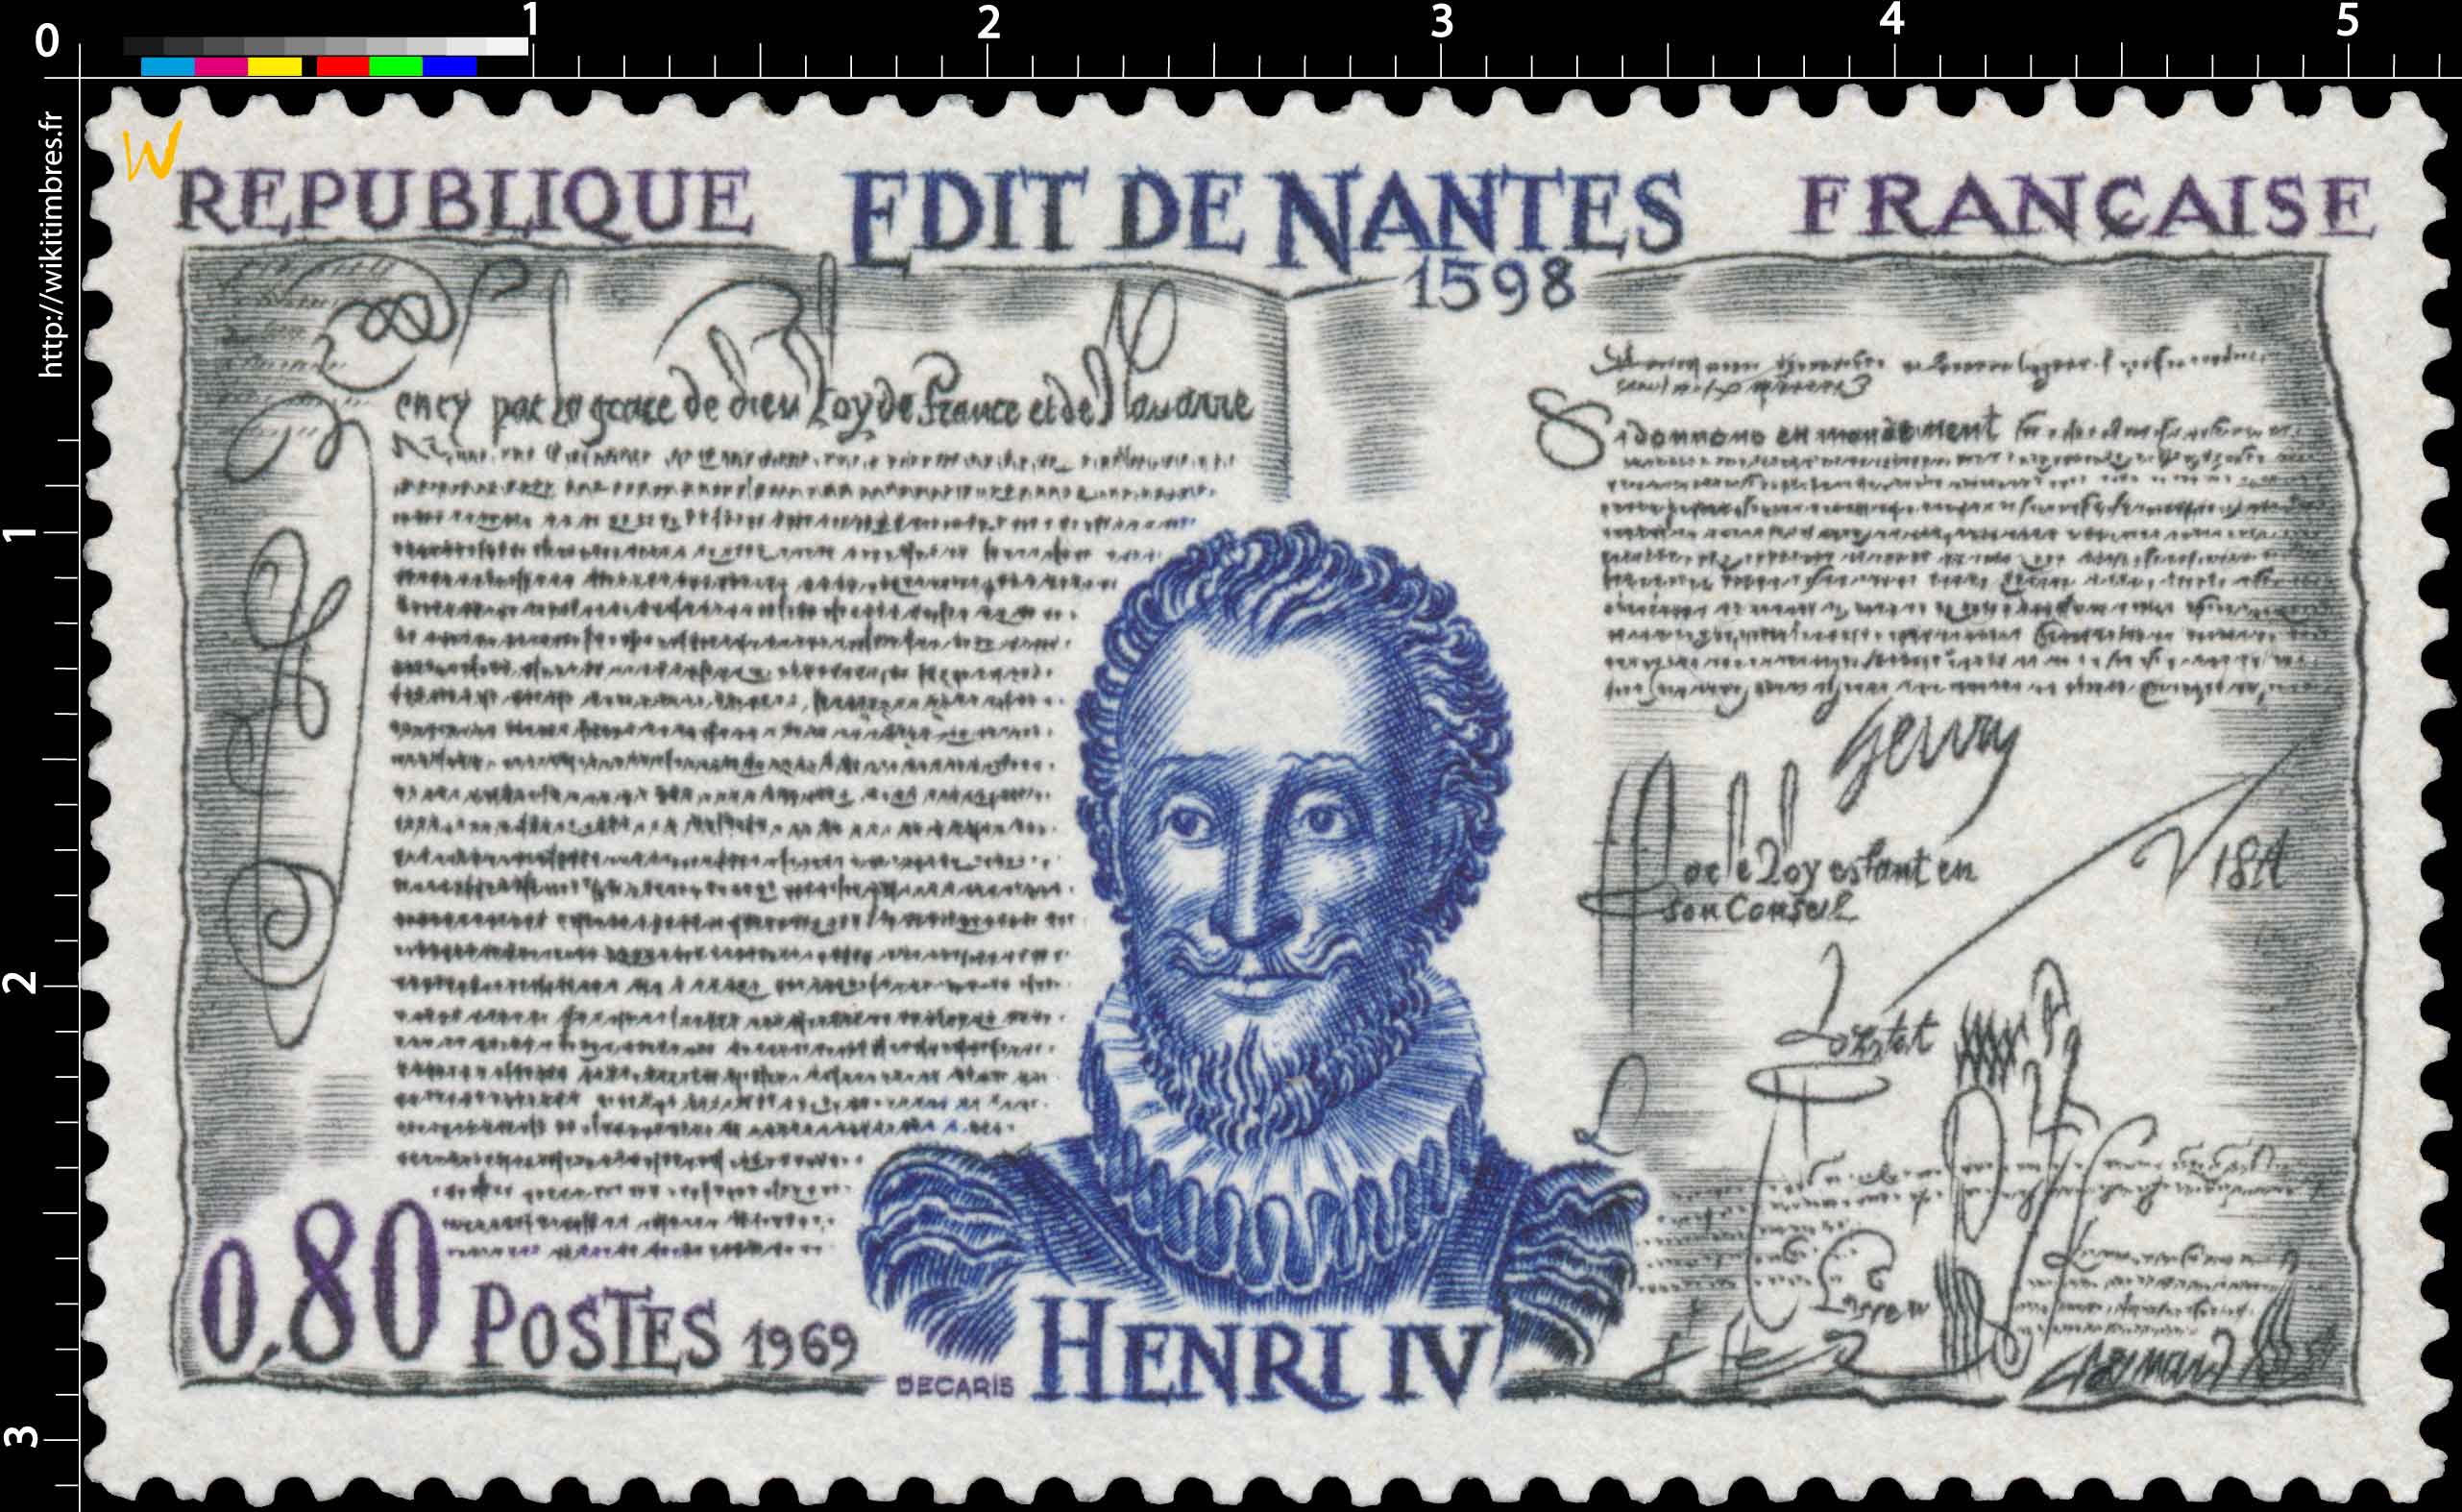 1969 ÉDIT DE NANTES 1598 HENRI IV